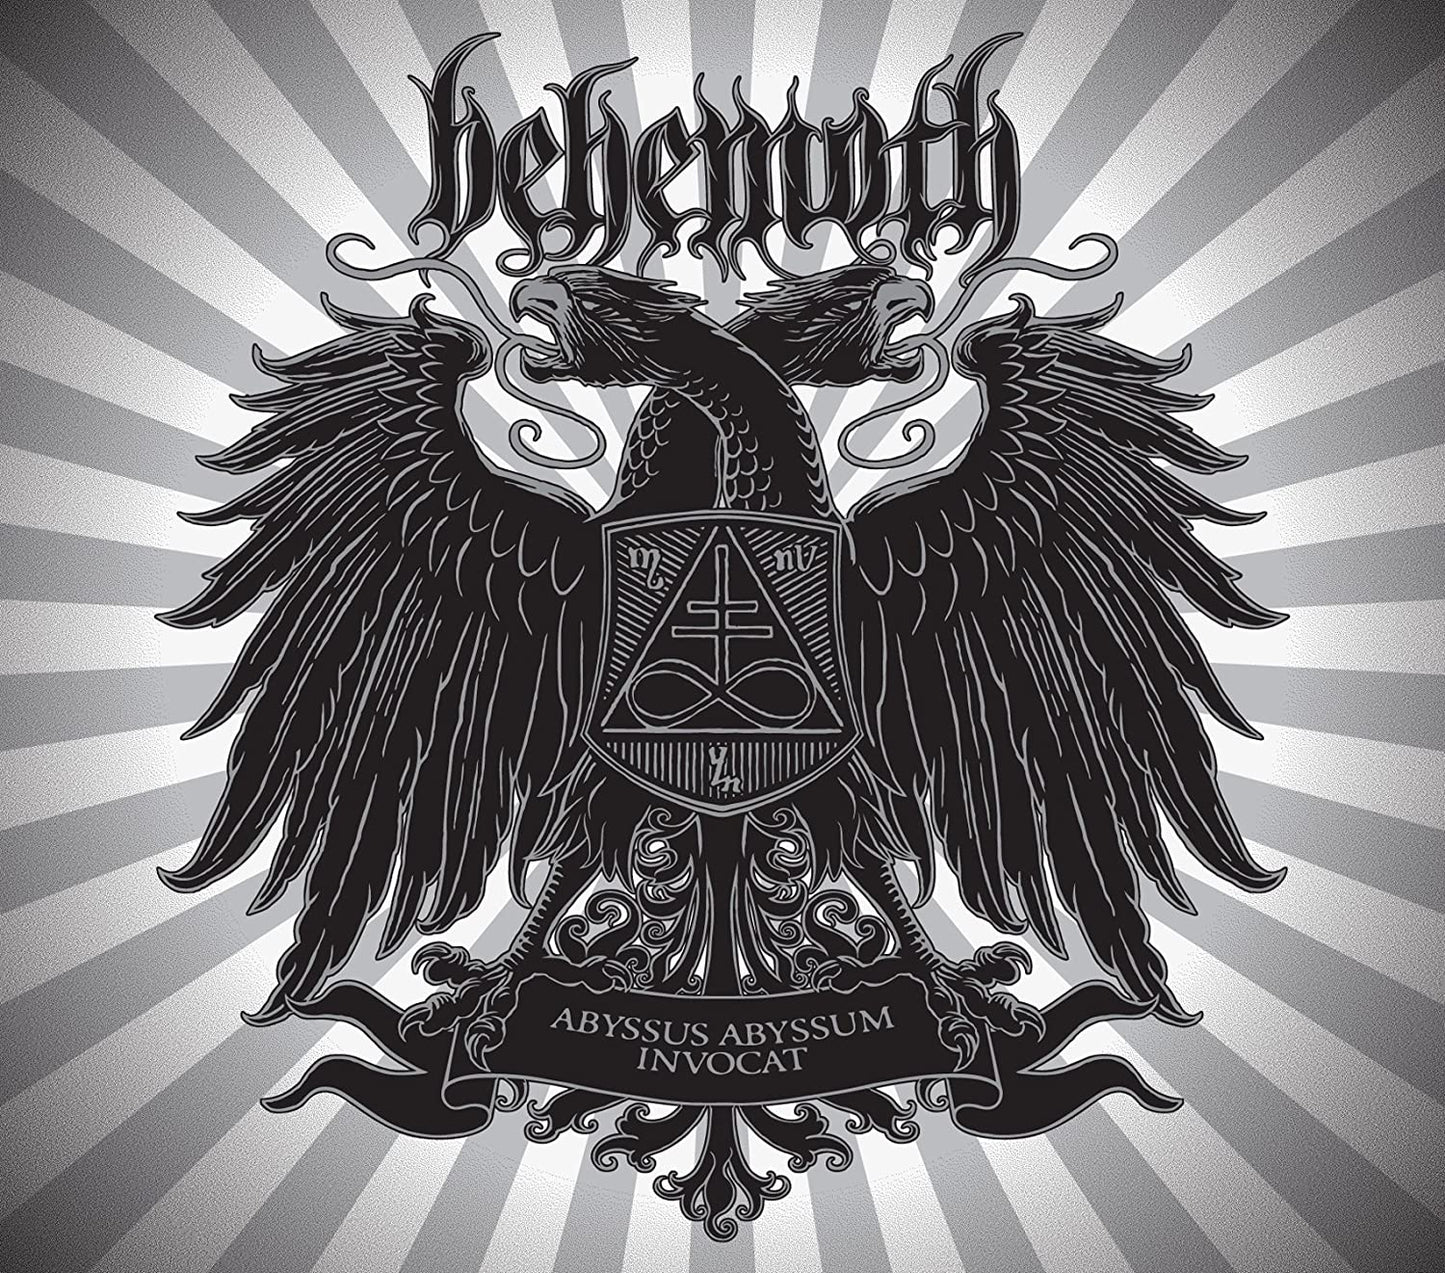 Behemoth - Abyssus Abyssum Invocat - 2CD